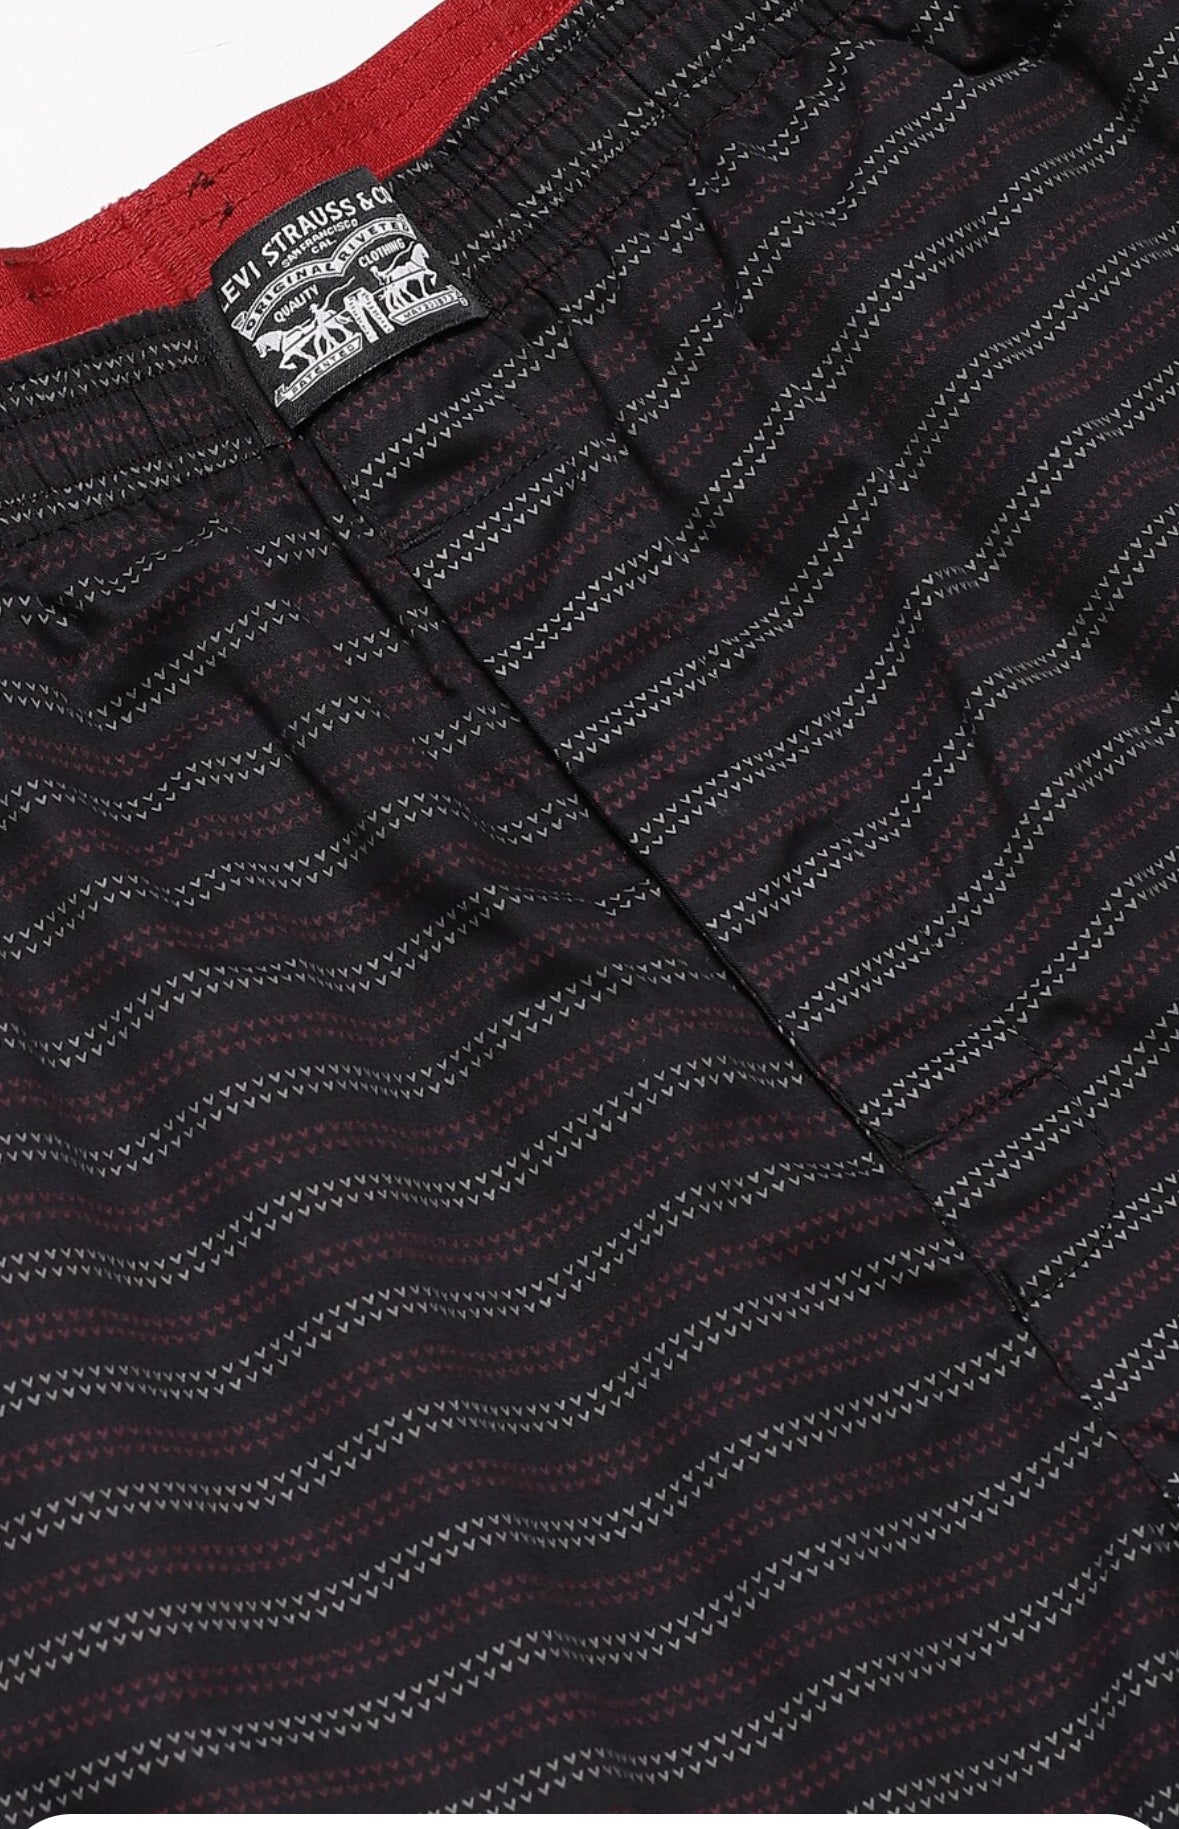 Men Assorted Striped Pure Cotton Boxers Shorts-300 ls-023